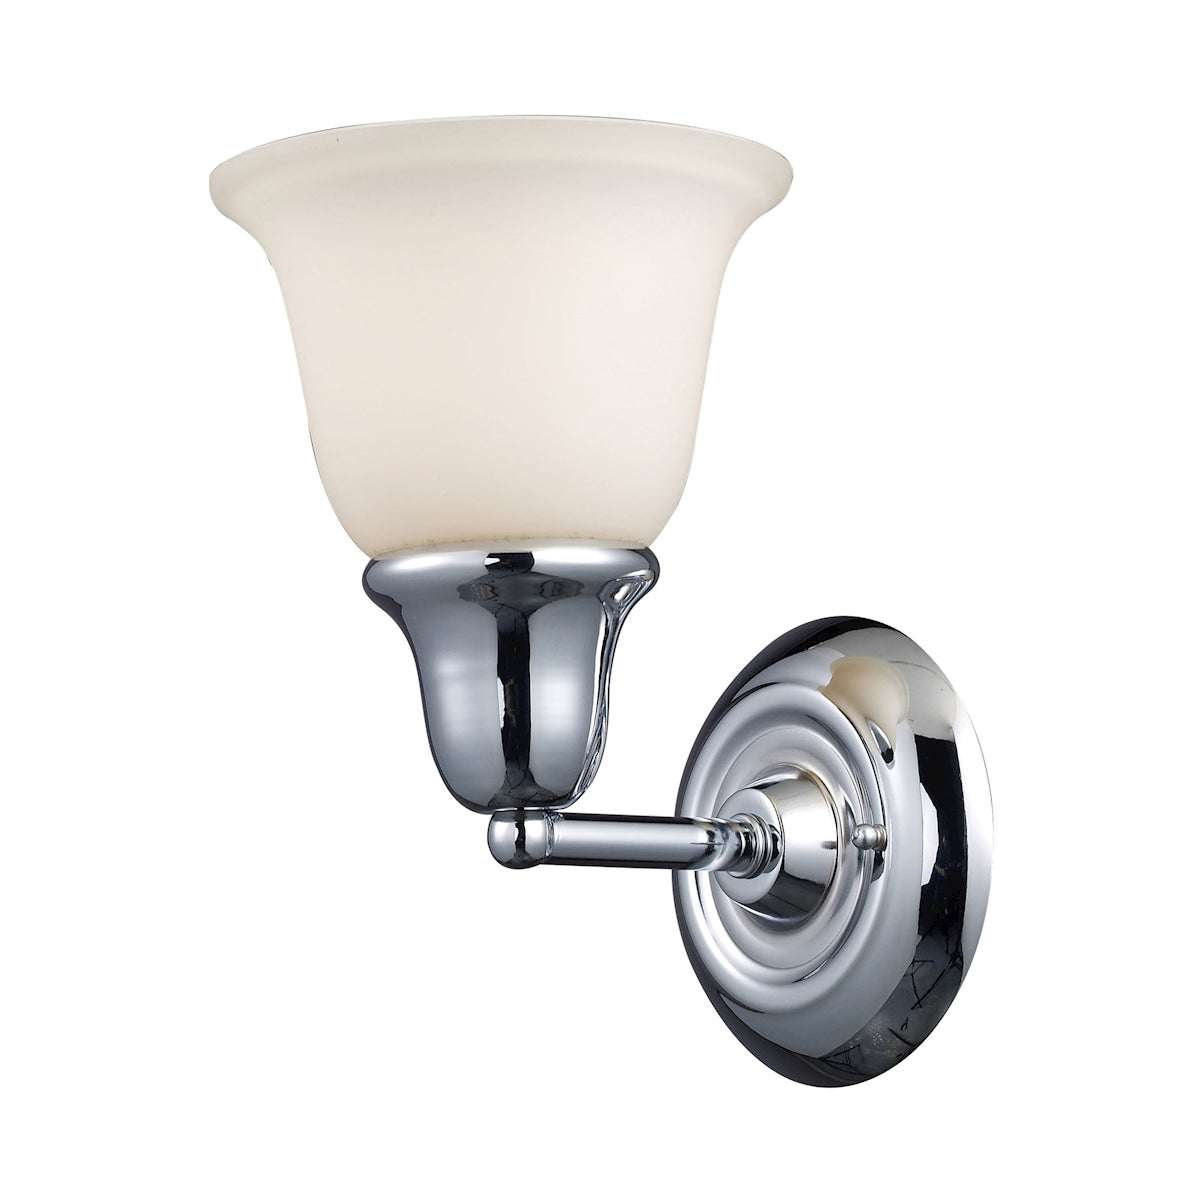 ELK Lighting 67010-1 Berwick 1-Light Vanity Lamp in Polished Chrome with White Glass